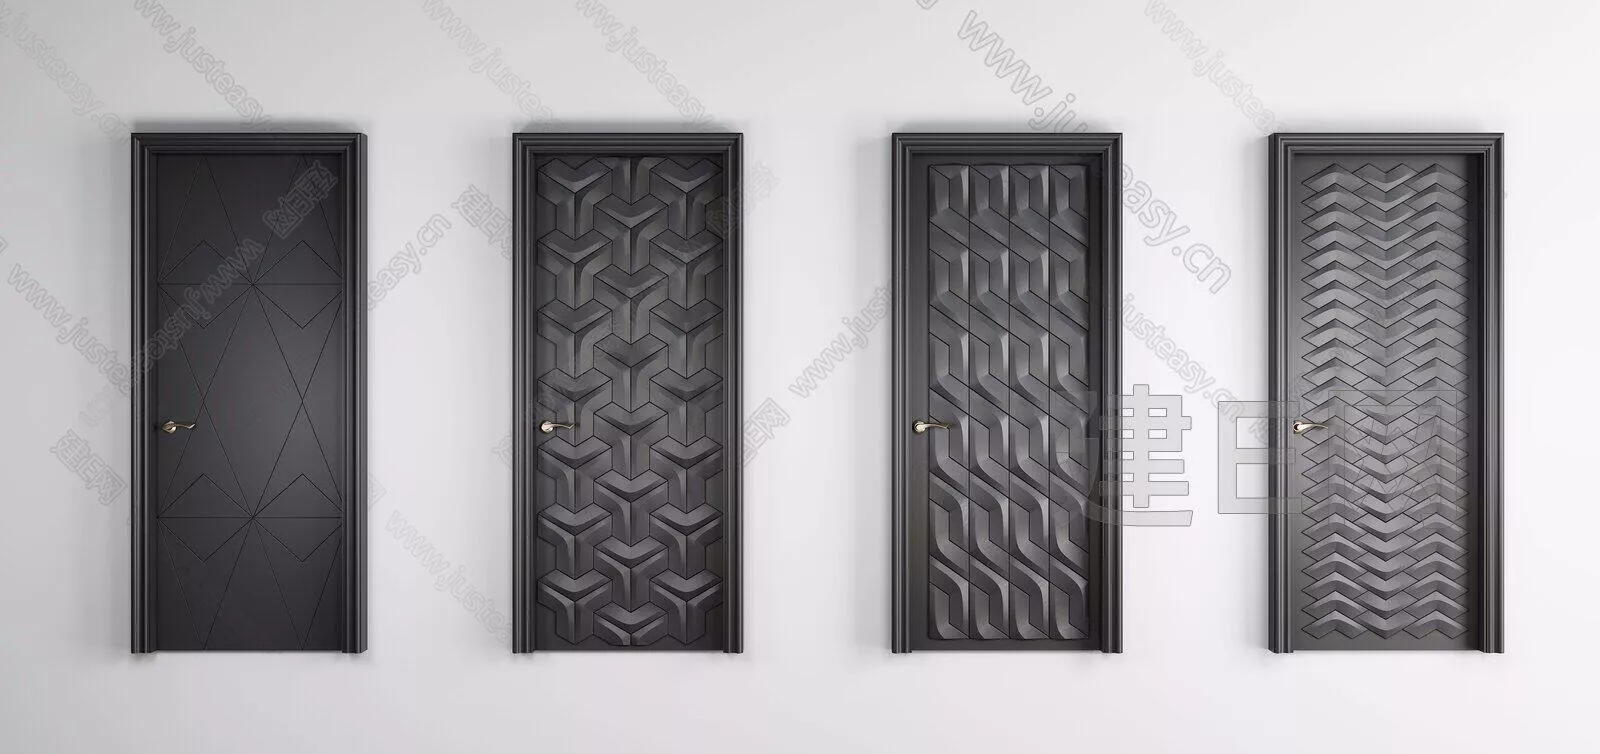 MODERN DOOR AND WINDOWS - SKETCHUP 3D MODEL - ENSCAPE - 112020927